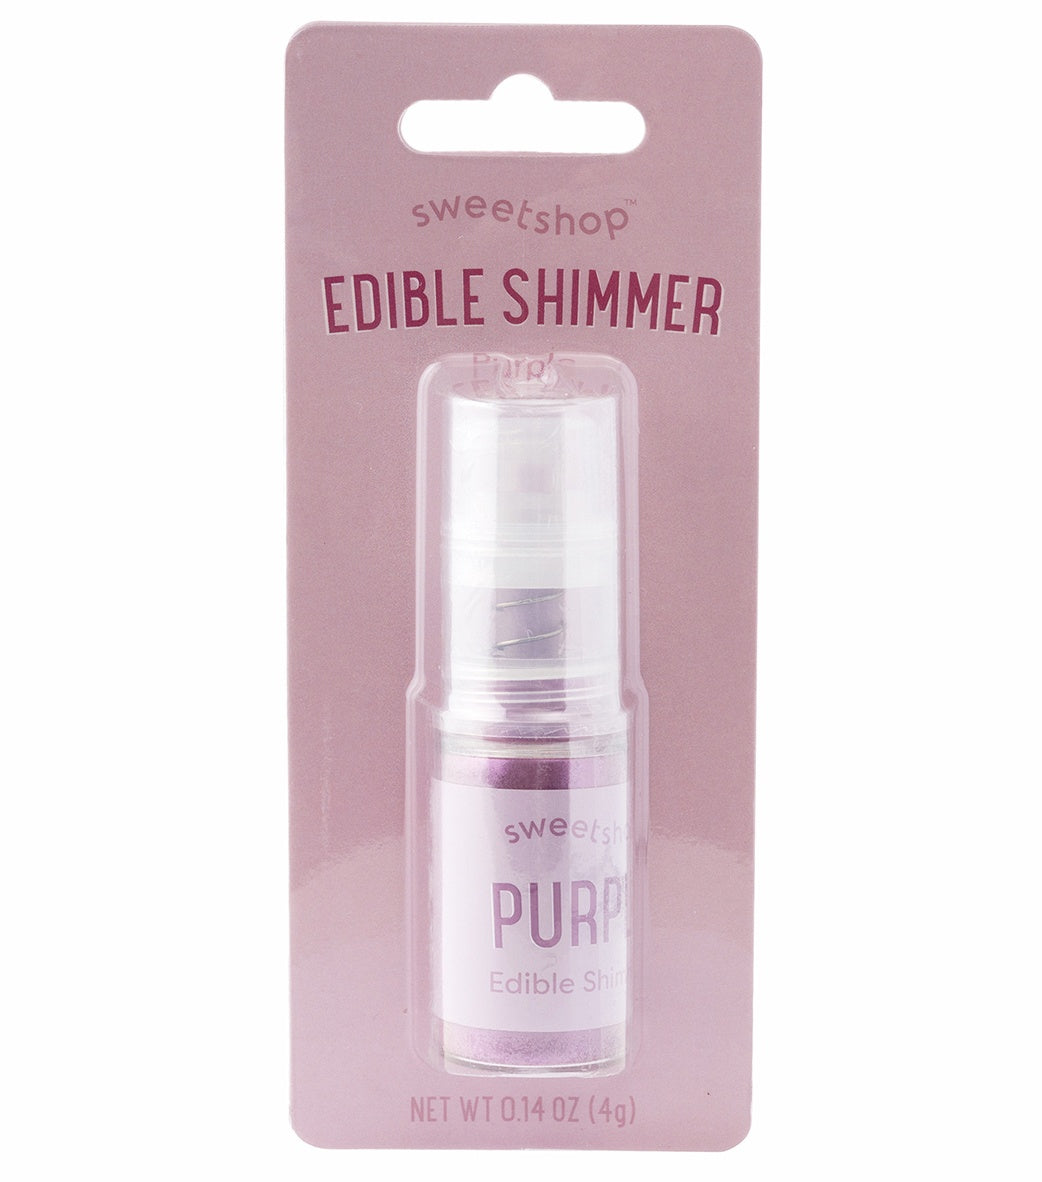 Sweetshop Edible Shimmer Dust Pump 0.14oz-Purple